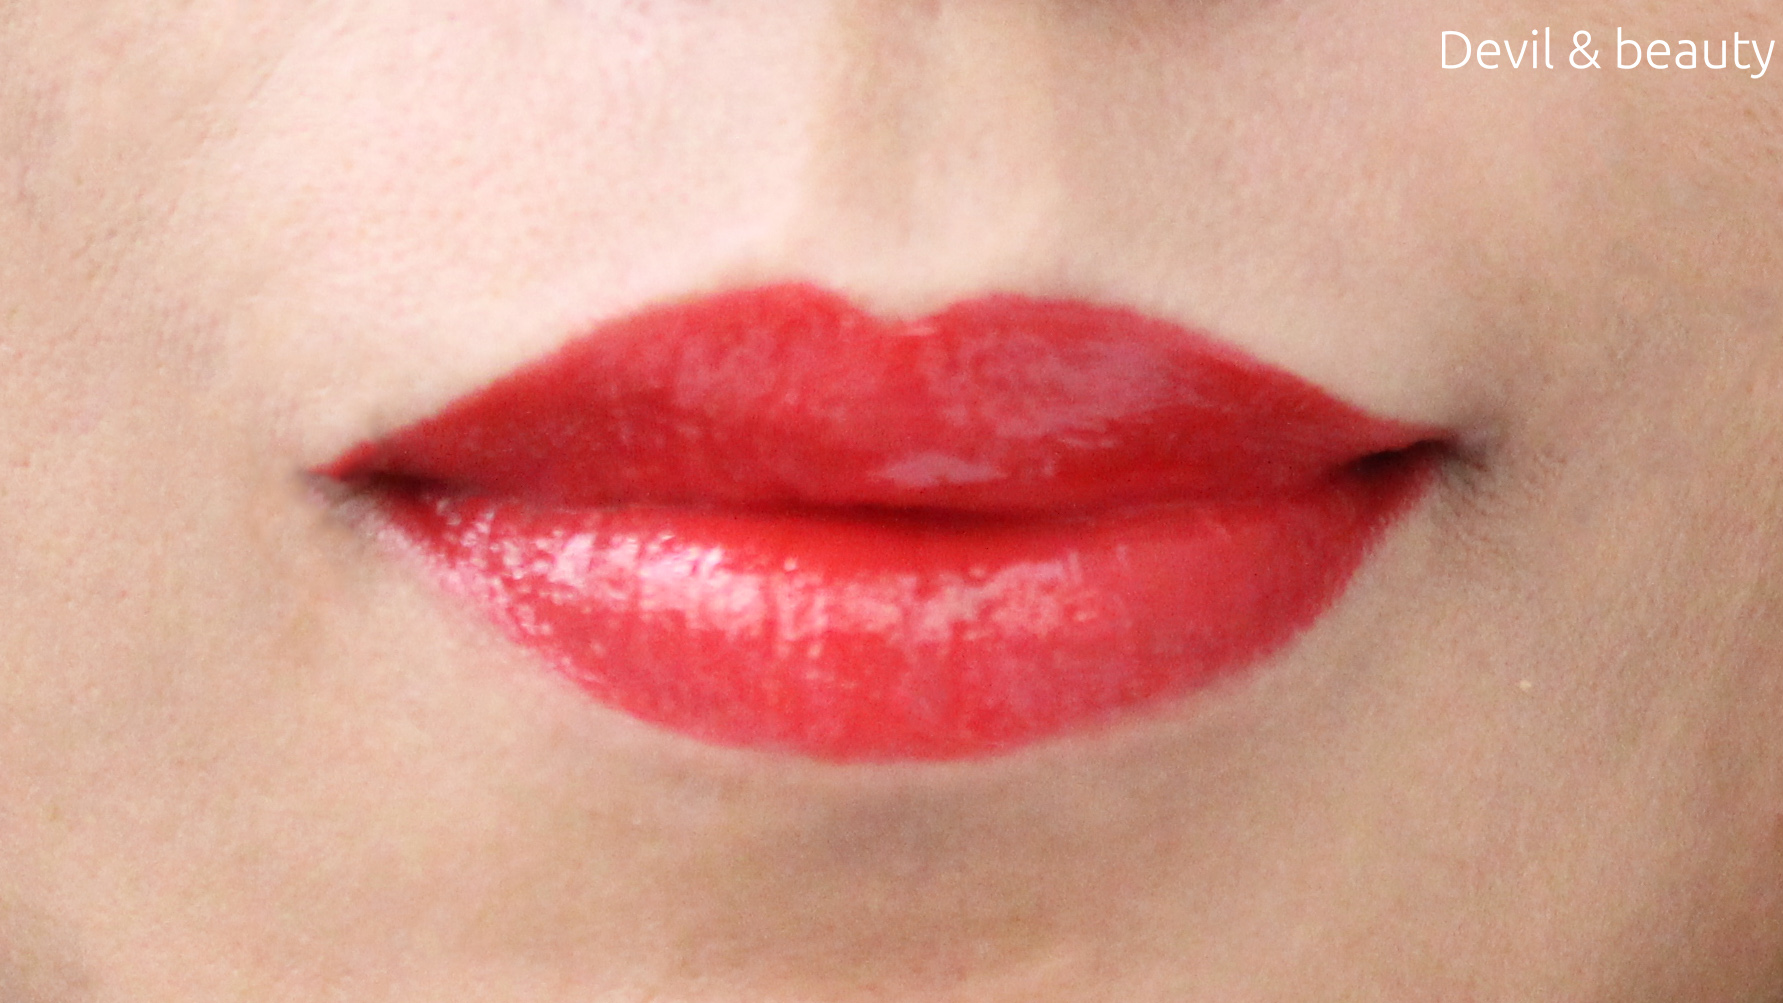 three-of-lipjam08-lipstick15-after-use - image